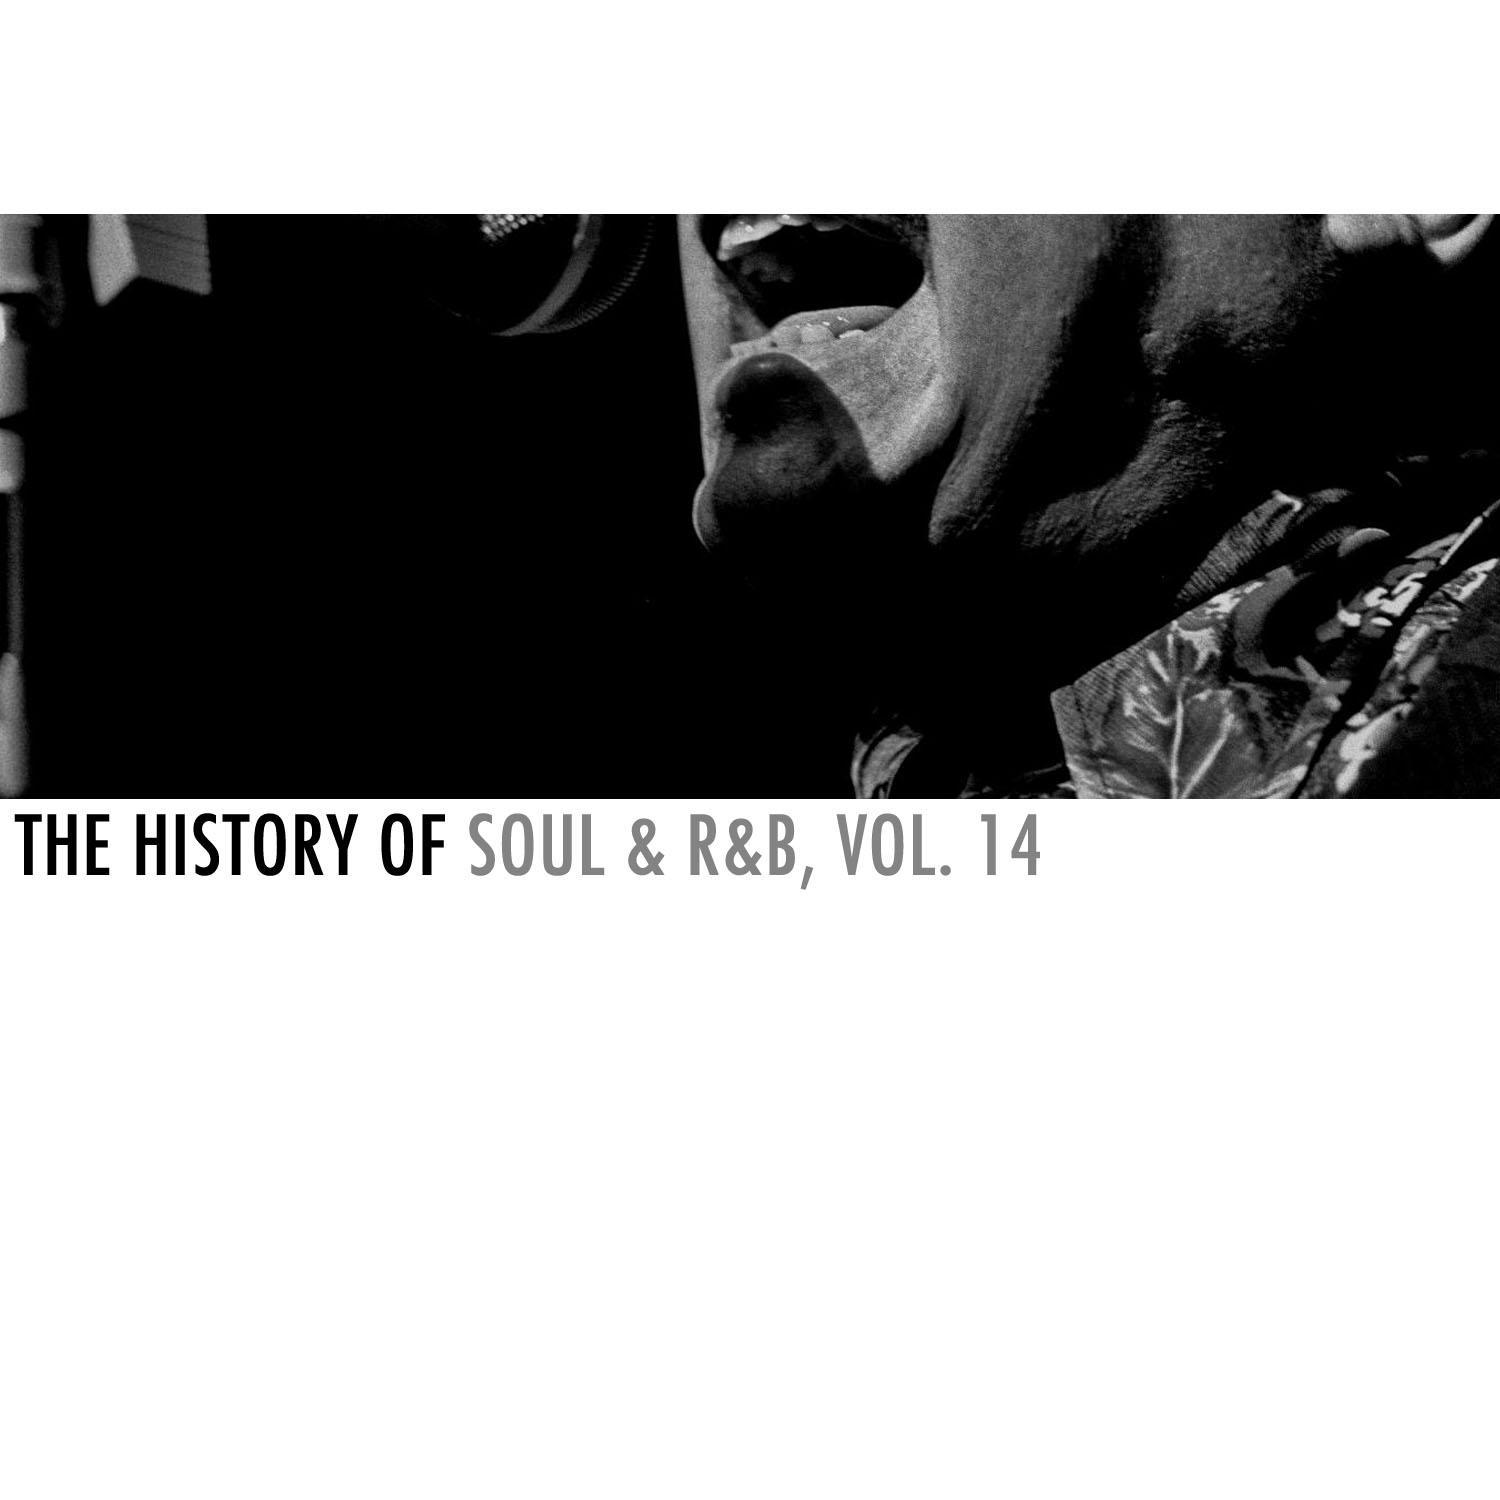 The History of Soul & R&B, Vol. 14